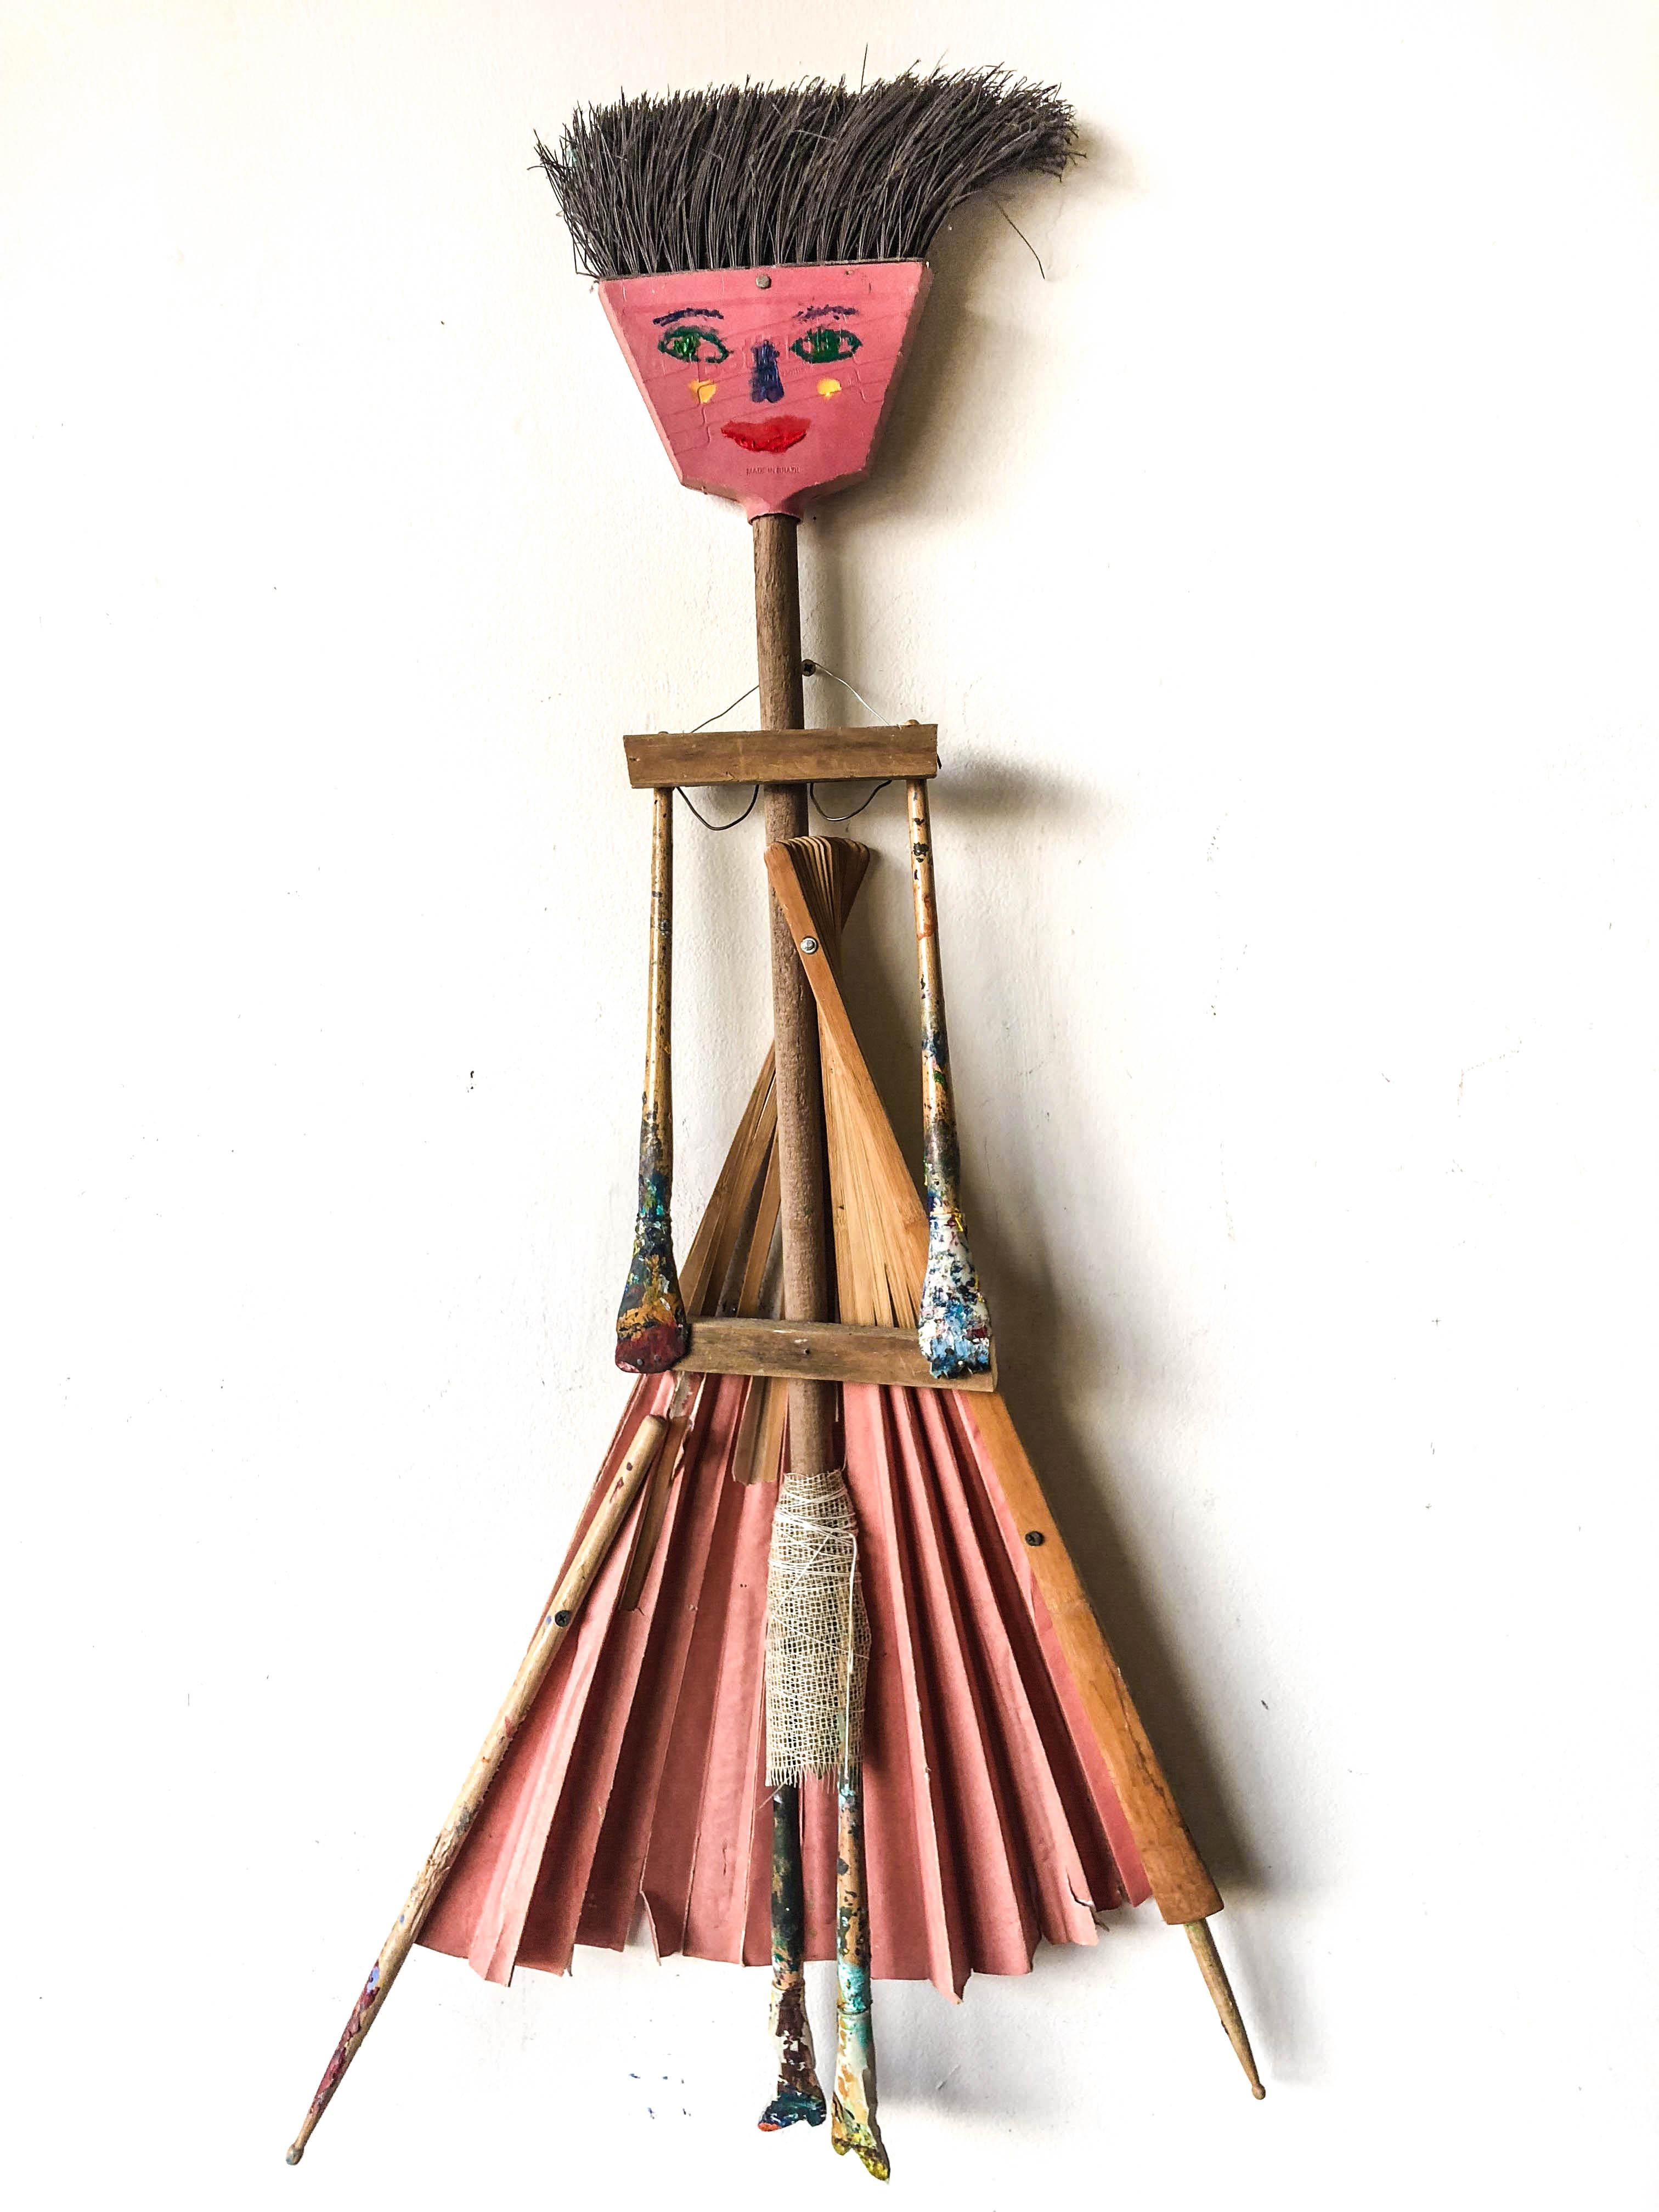 Rick Borg Figurative Sculpture - Bettanin Broom Woman with Found Objects//Folk Art